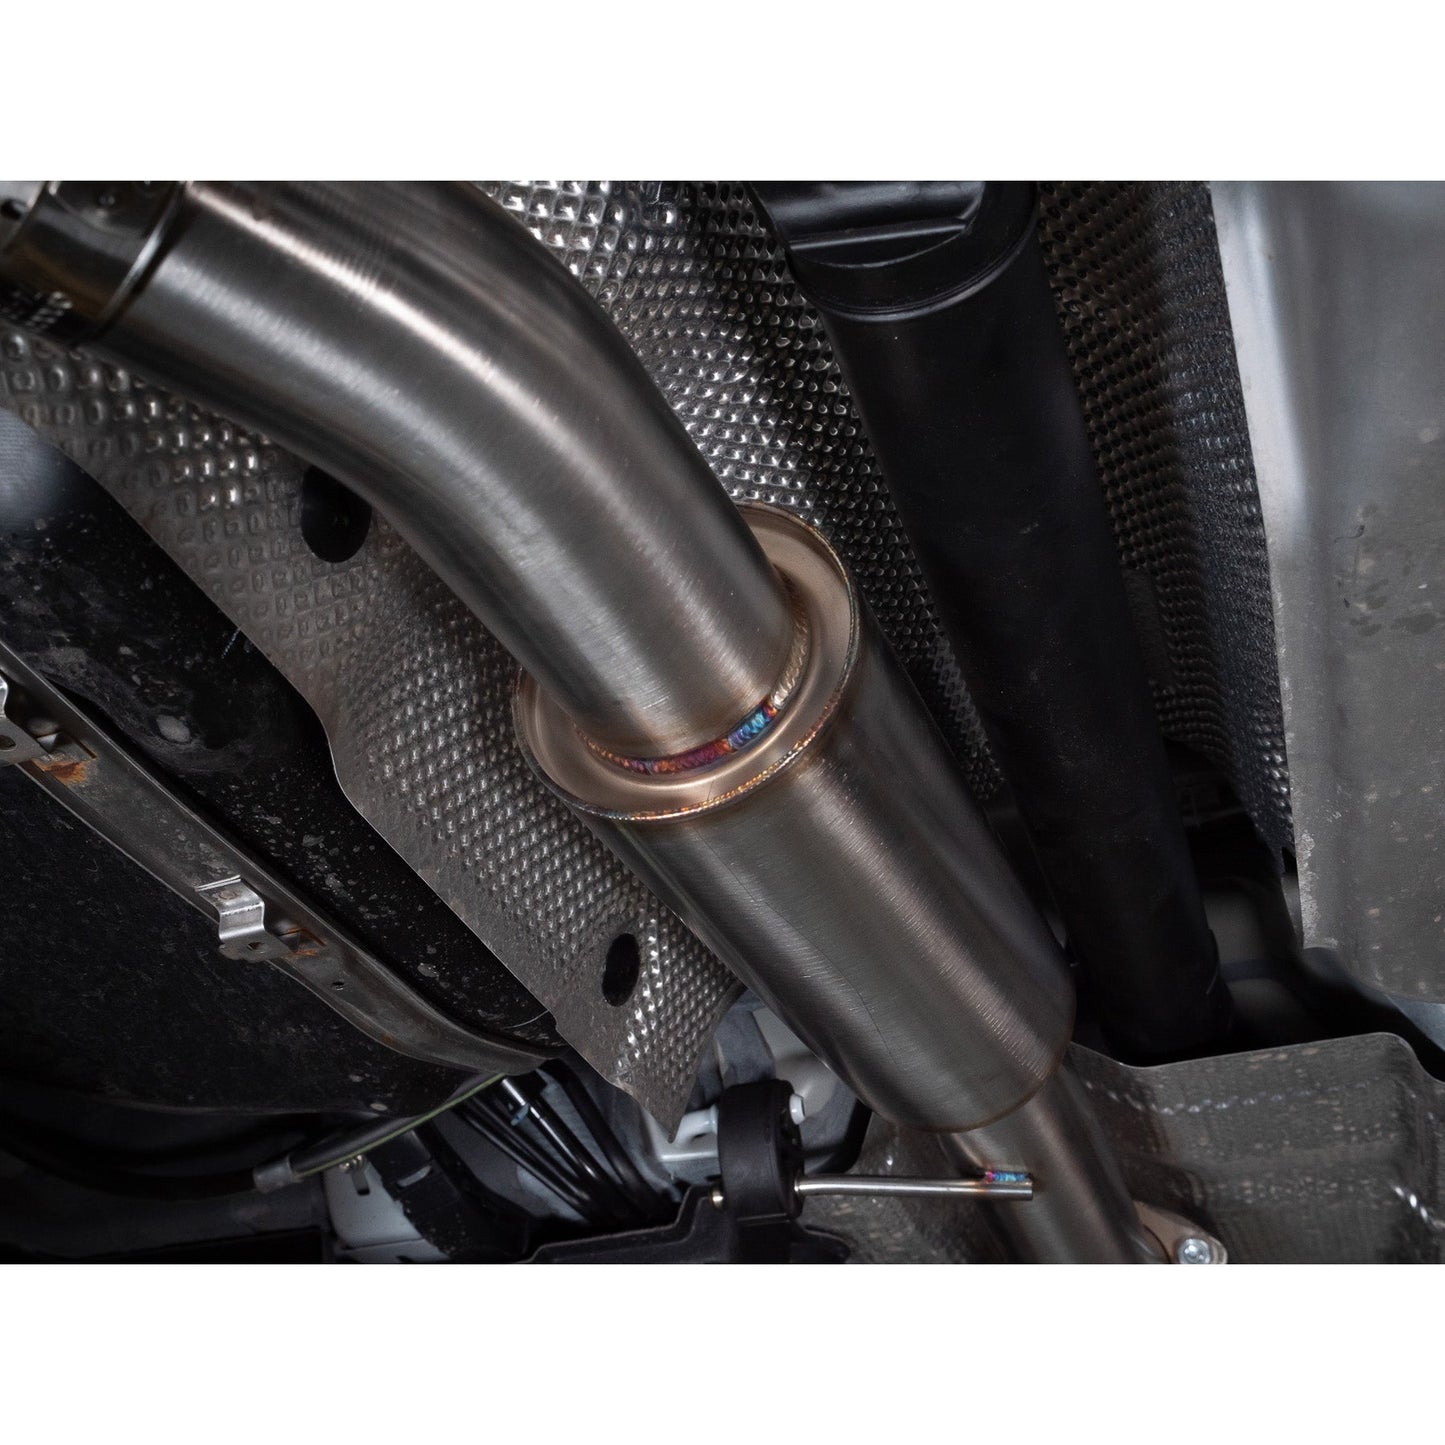 Cobra Venom GPF-Back Rear Box Delete Race Performance Exhaust - Toyota GR Yaris 1.6